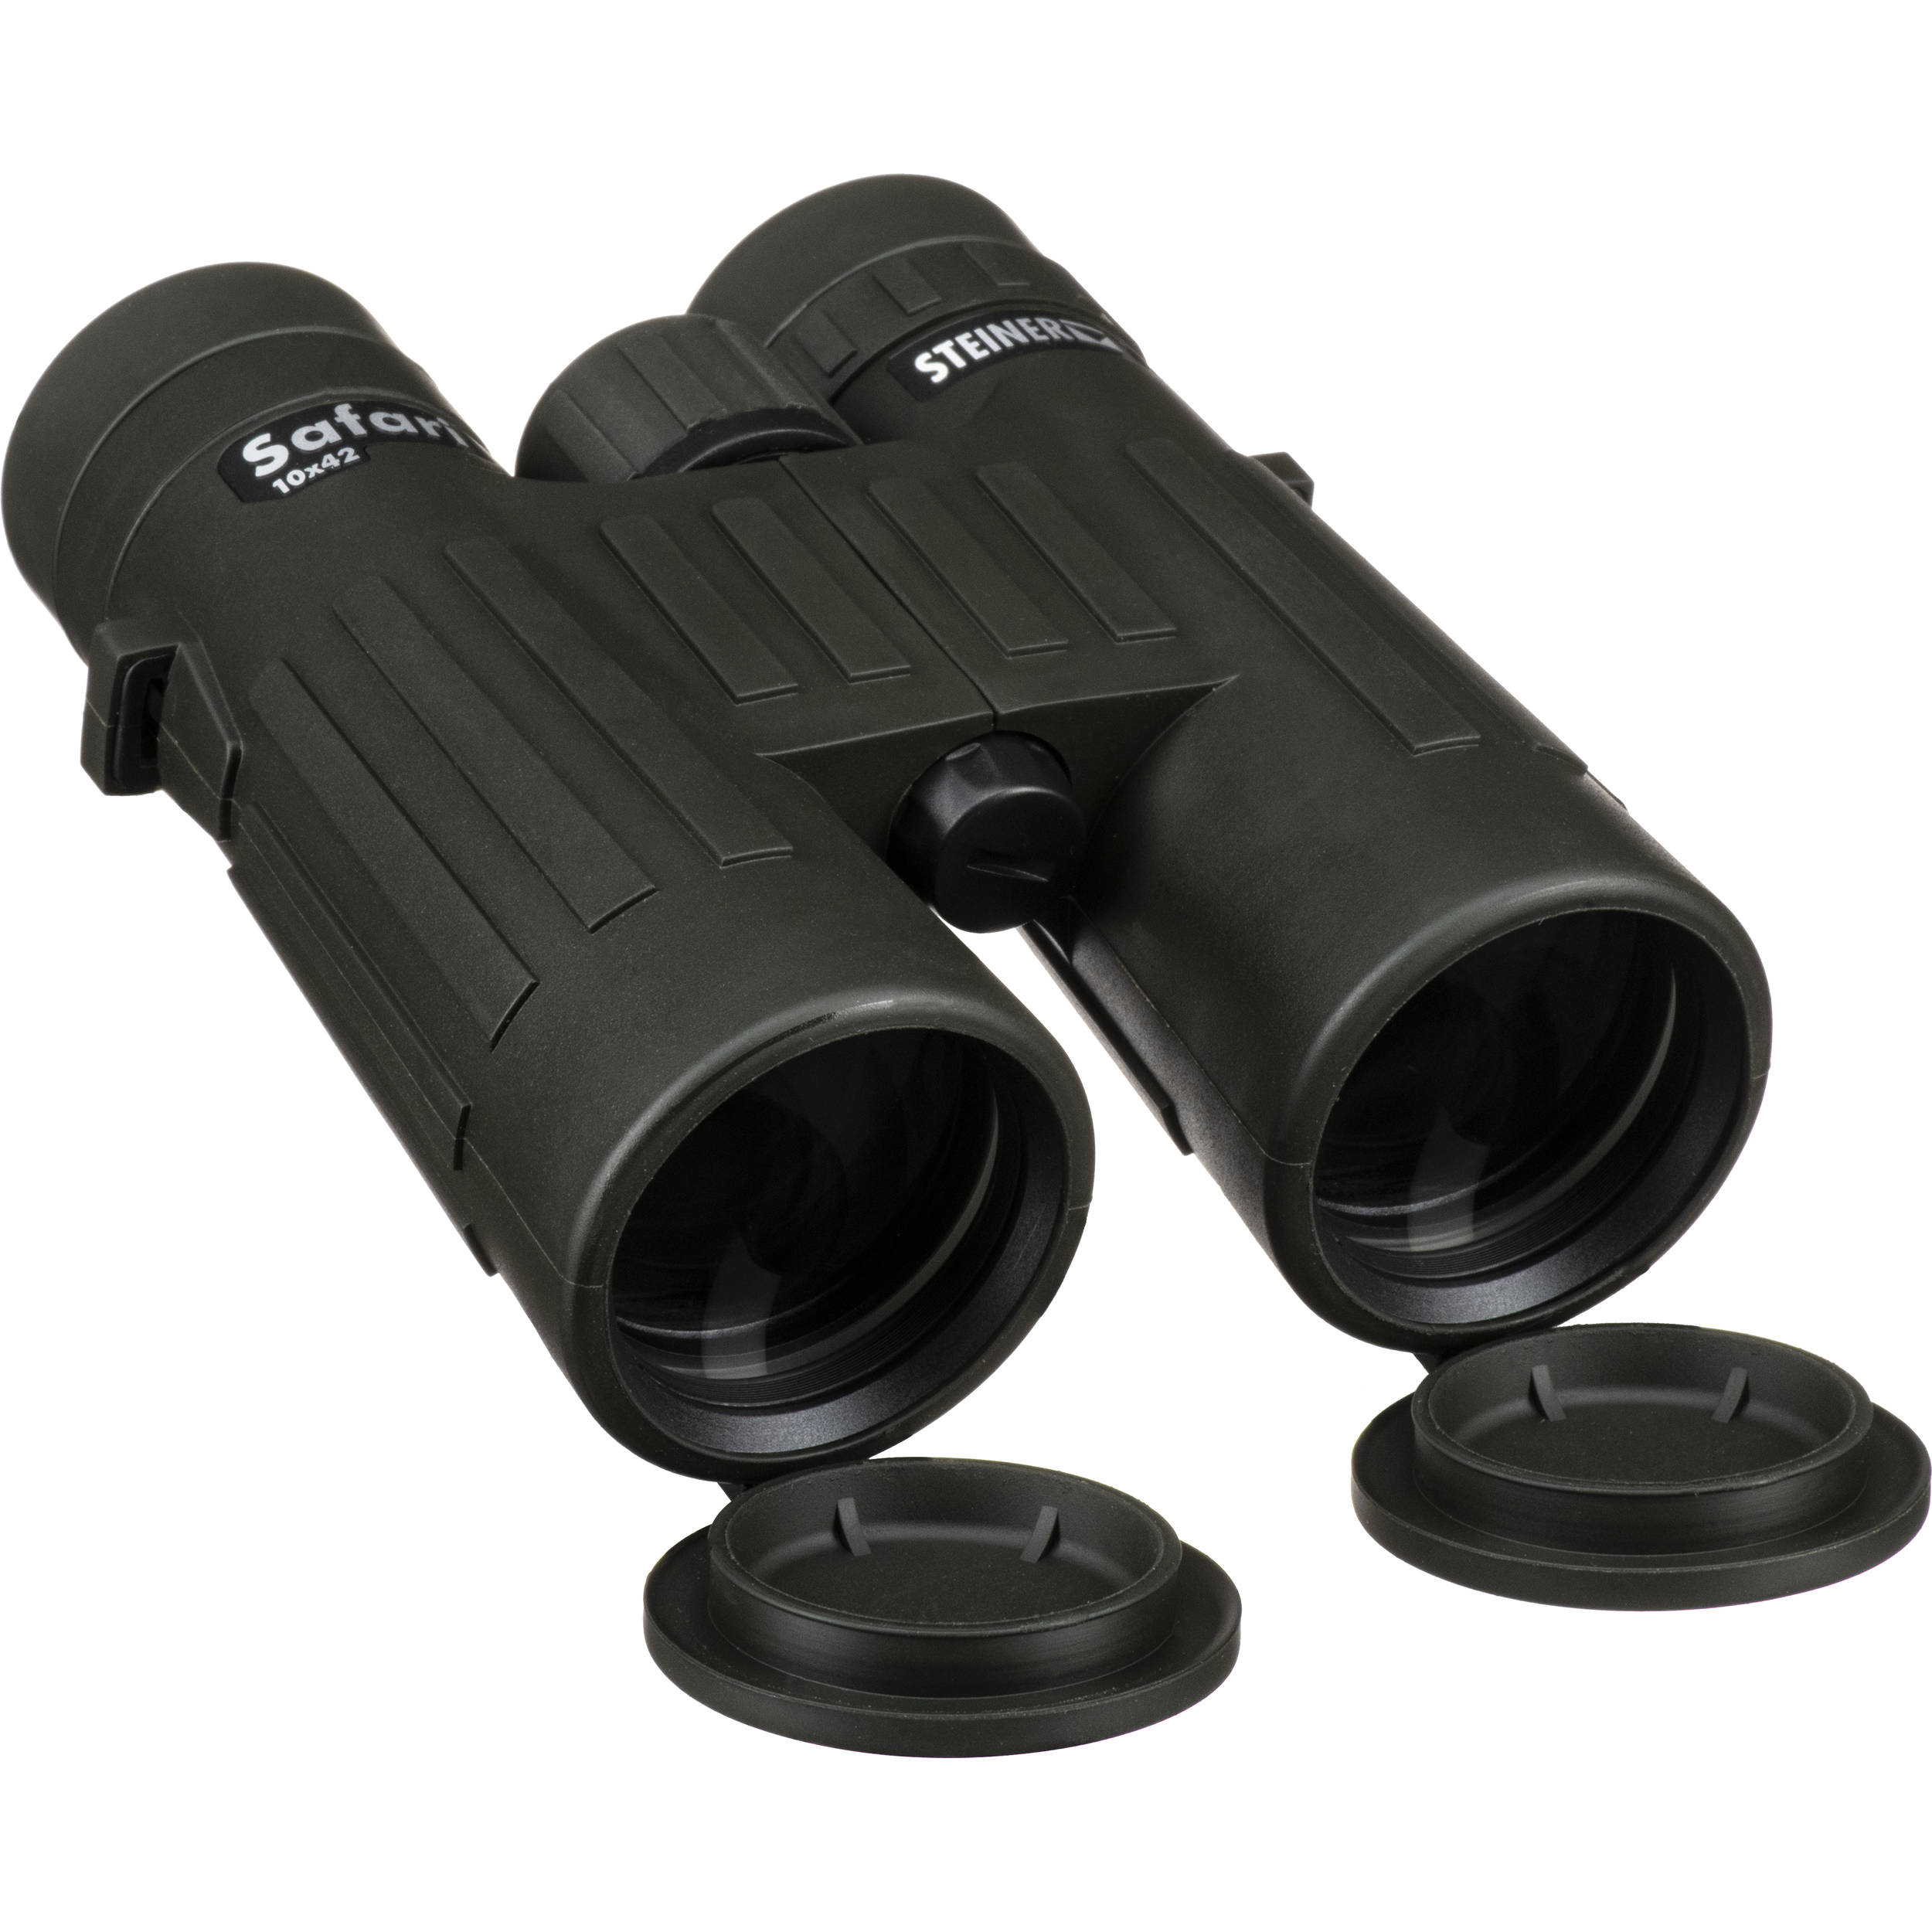 Steiner 10x42 Safari Binoculars 2042 B 